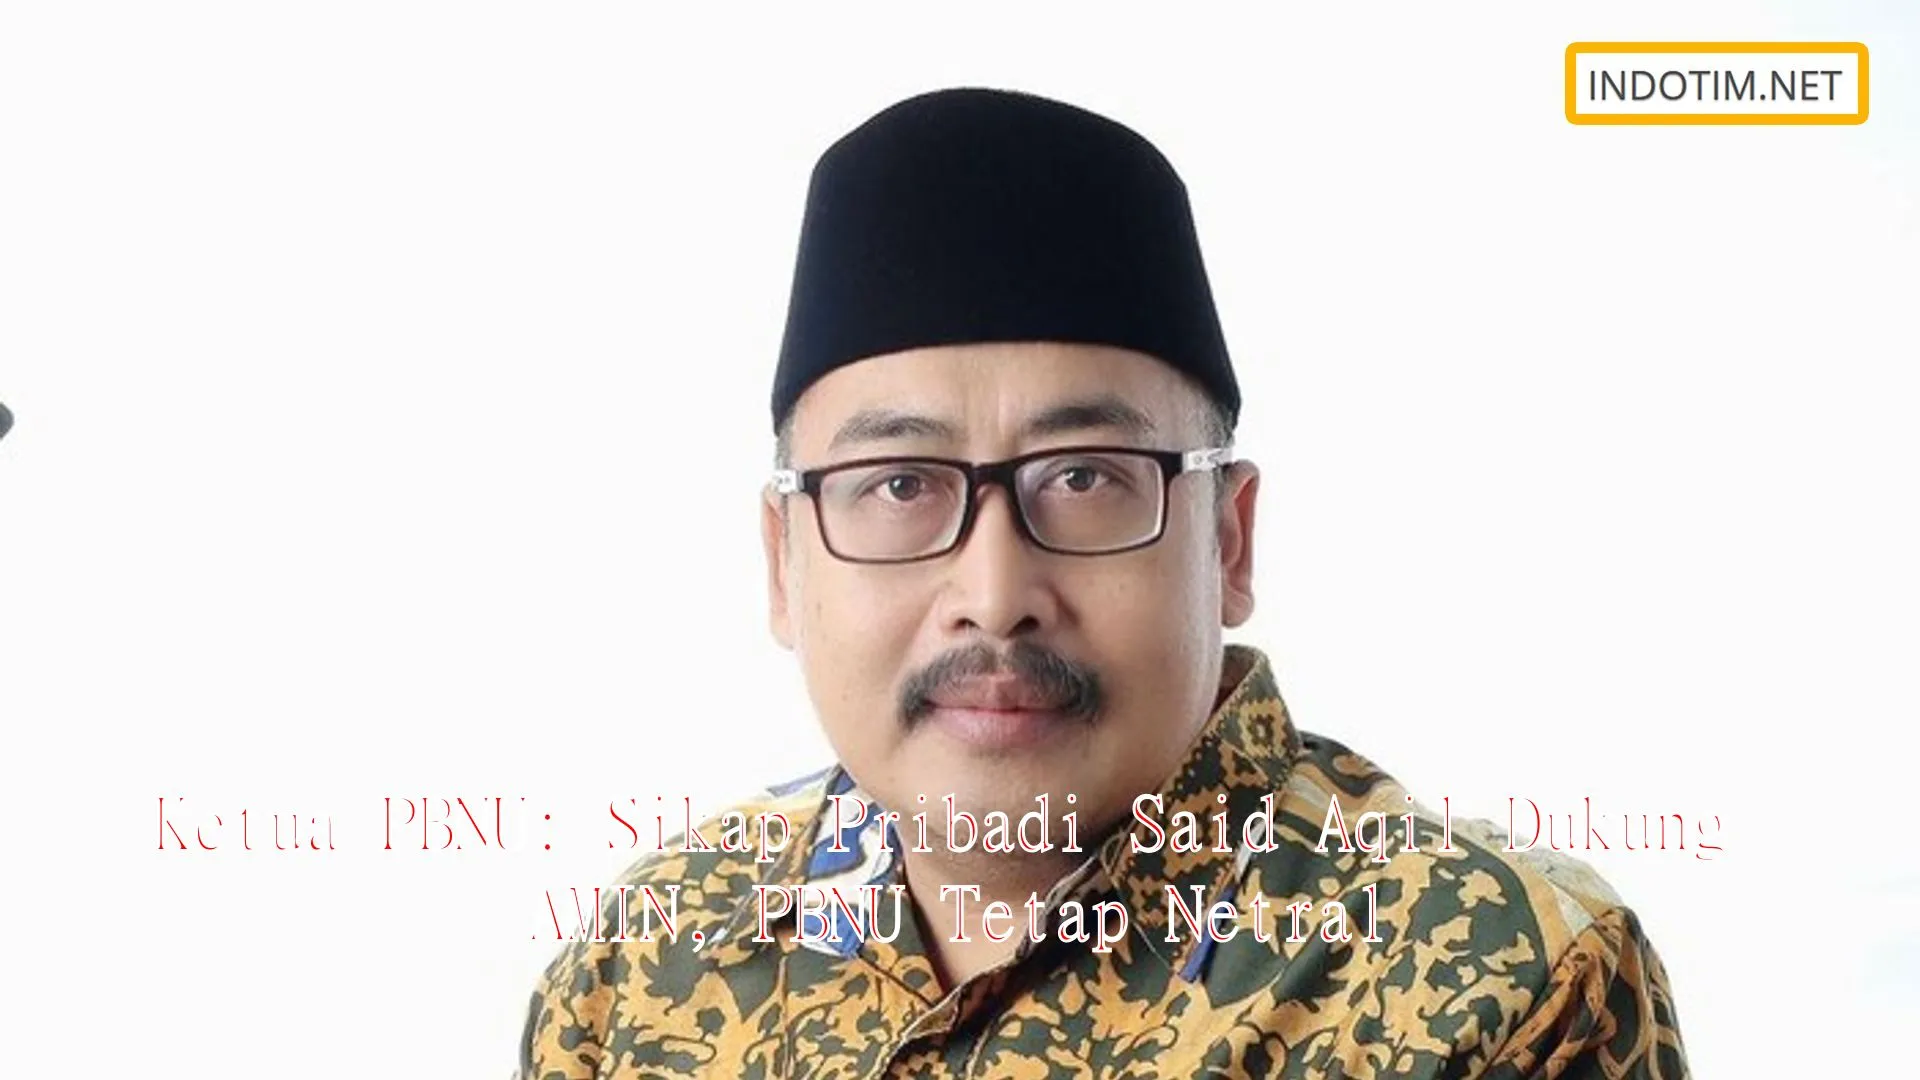 Ketua PBNU: Sikap Pribadi Said Aqil Dukung AMIN, PBNU Tetap Netral